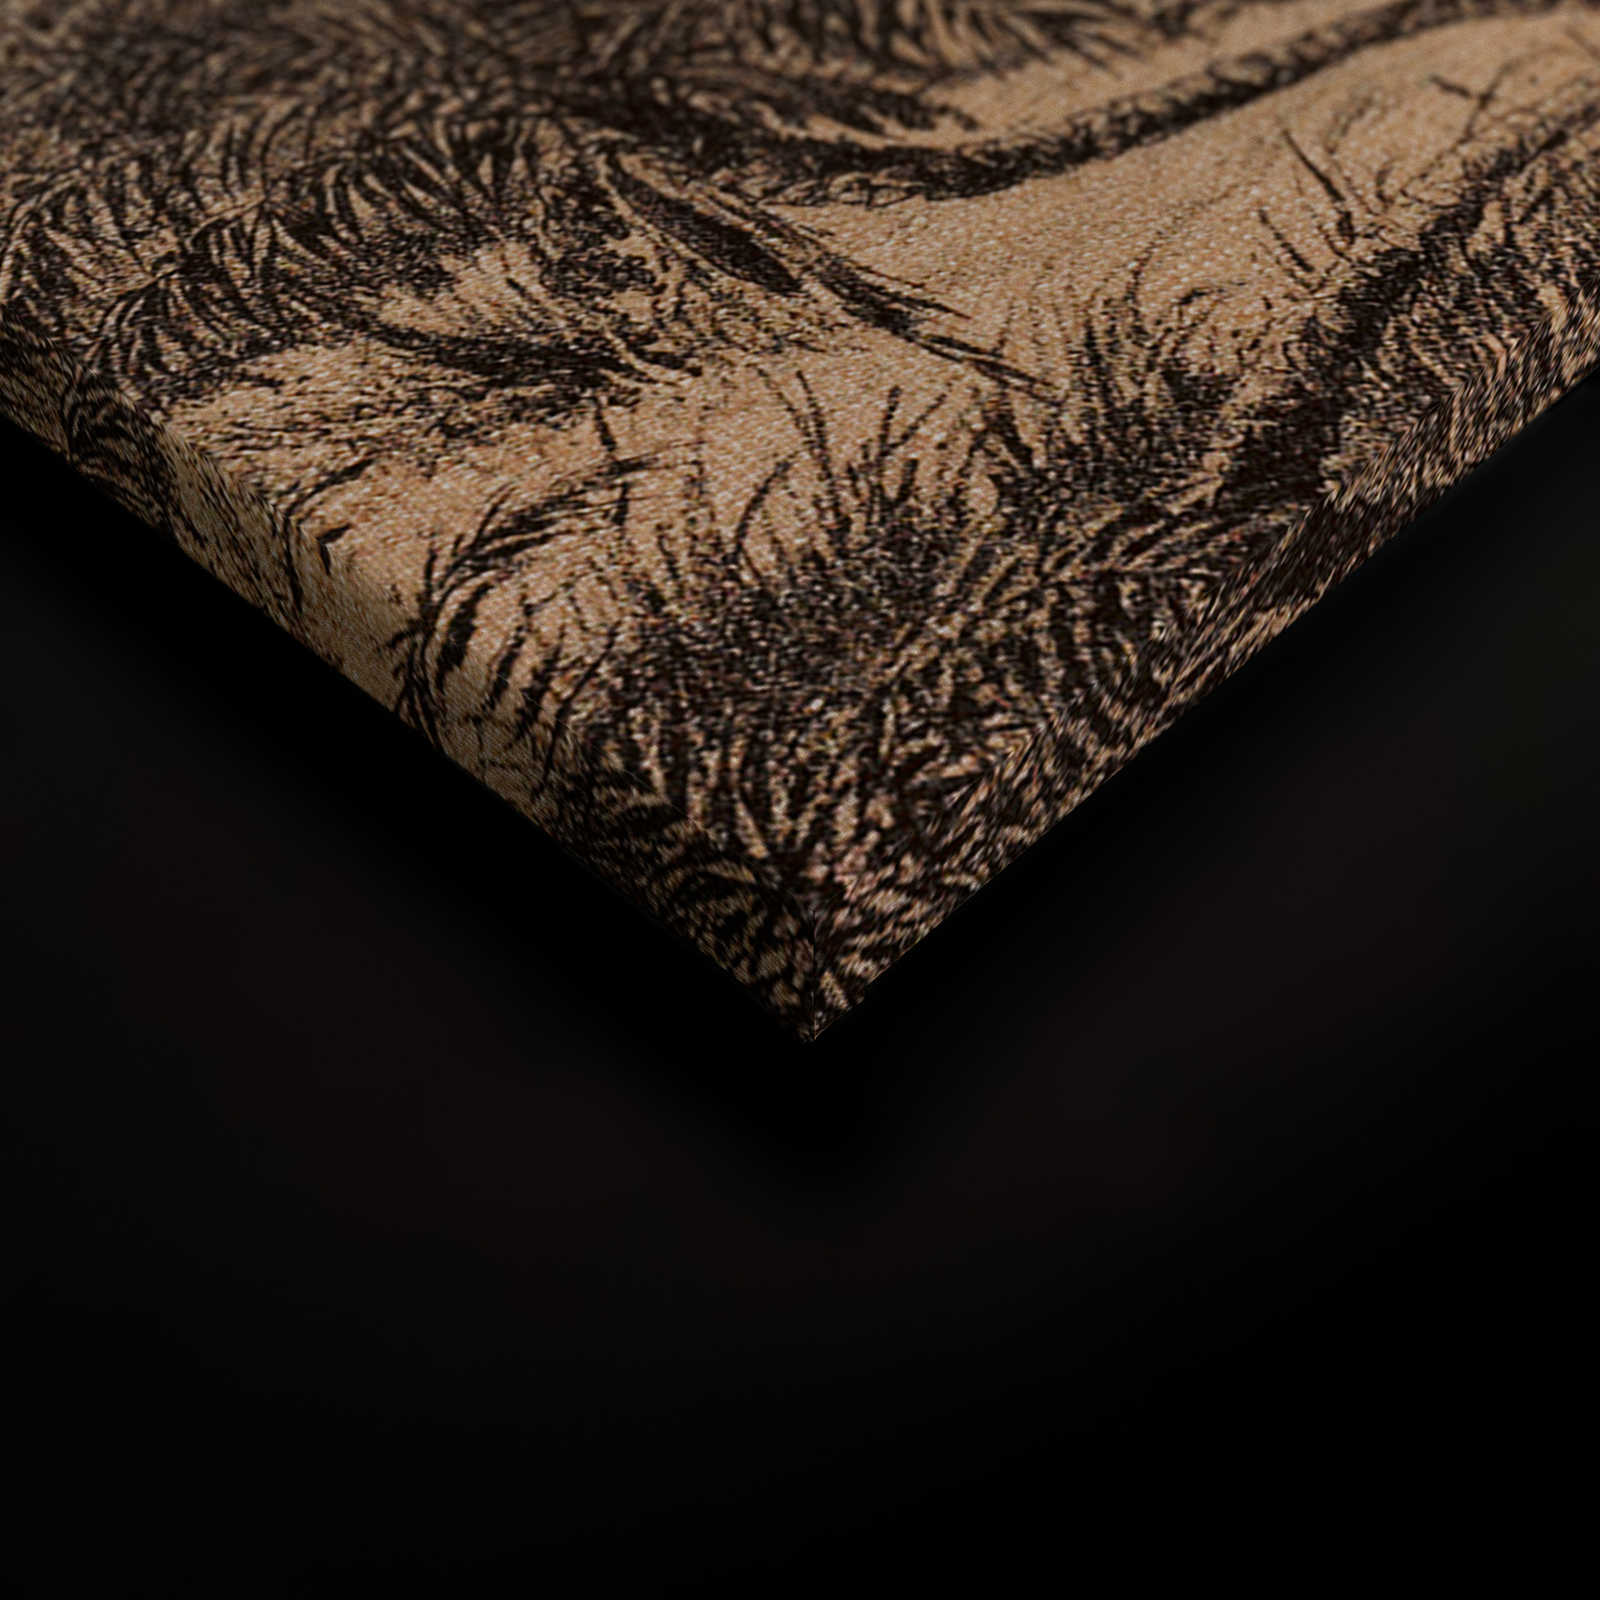             Cuadro en lienzo Vista de la selva tropical con textura de lino Óptica | beige, negro - 0,90 m x 0,60 m
        